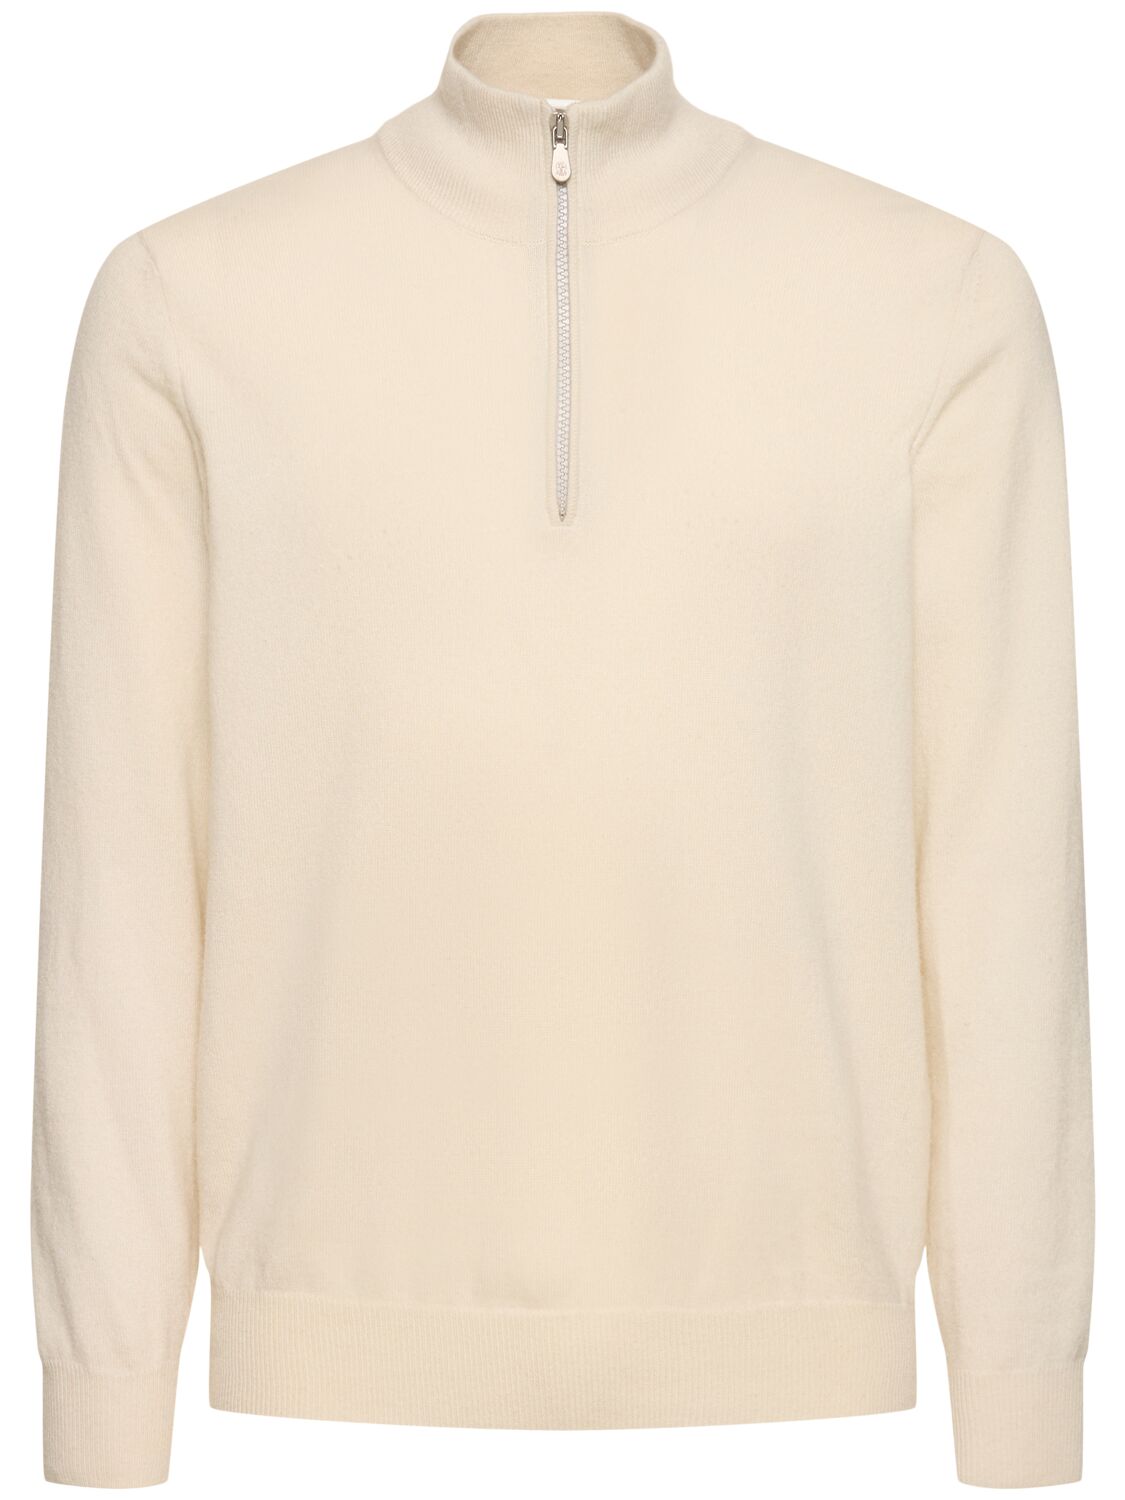 Half Zip Cashmere Turtleneck Sweater